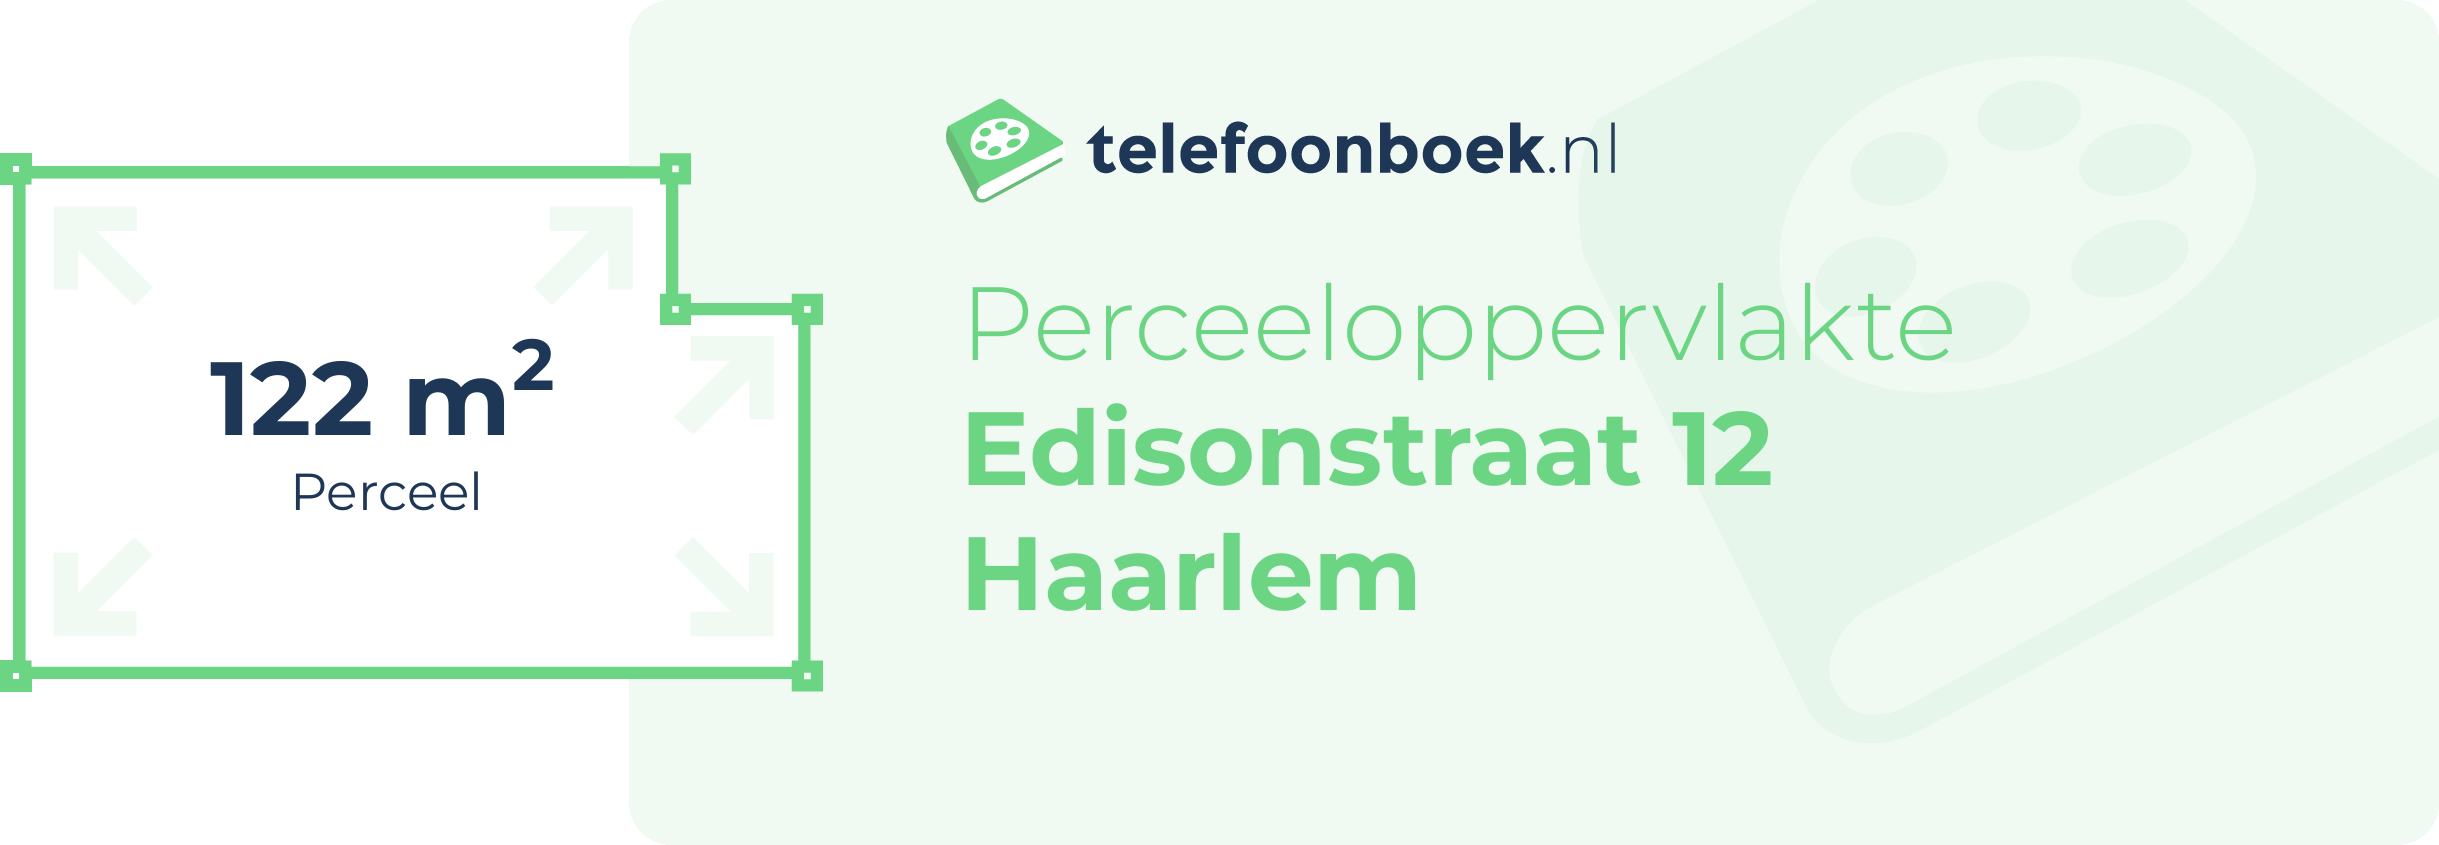 Perceeloppervlakte Edisonstraat 12 Haarlem